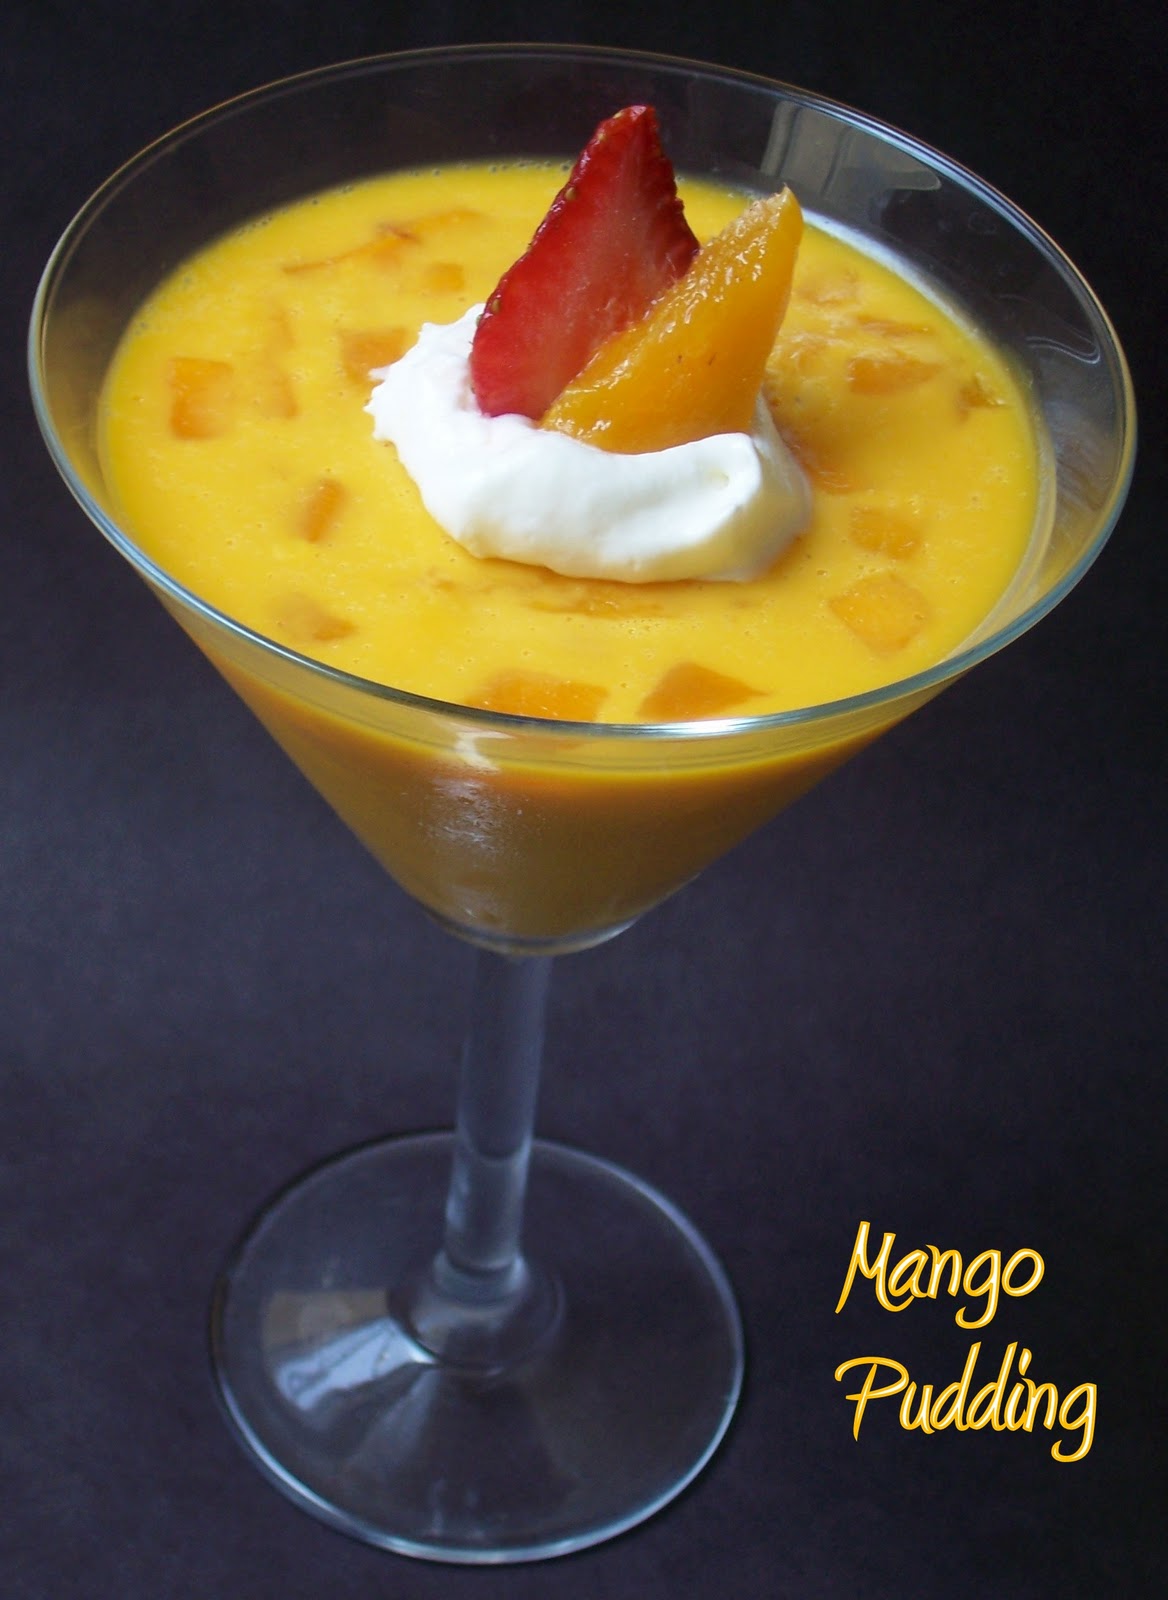 Tasty Treats: Mango Pudding